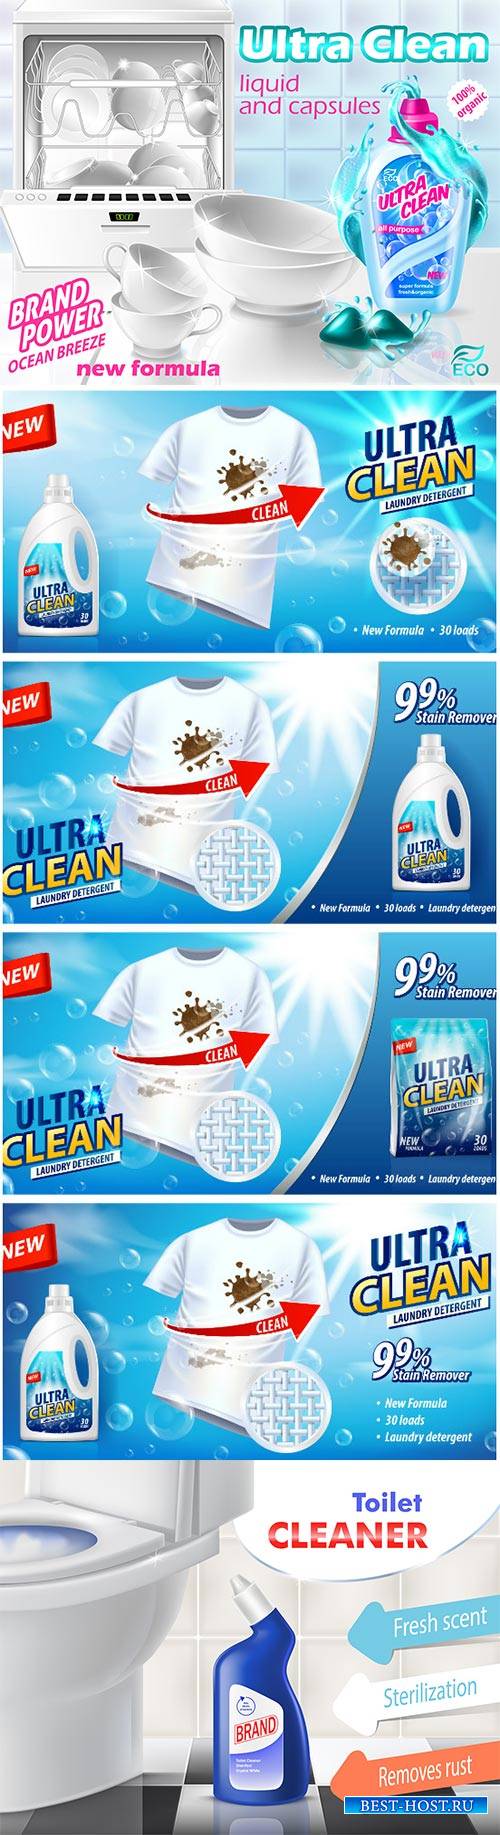 Mockup for brand advertising vector design, laundry detergent, liquid clean ...